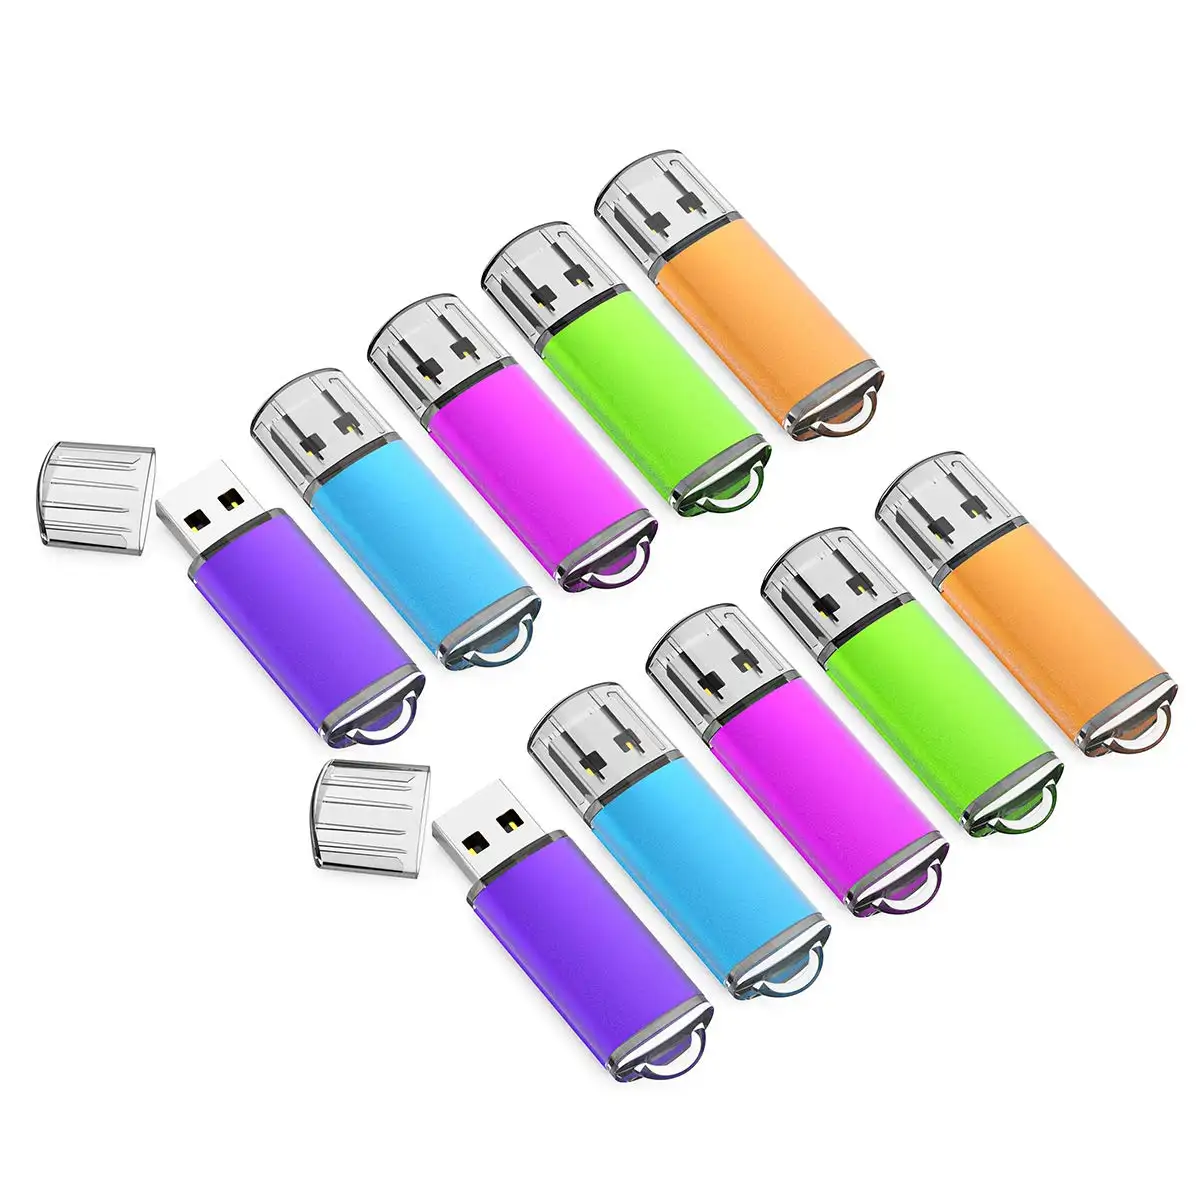 Memori penyimpanan Usb Disk 32 gb 64gb, tutup jempol Drive desain Pendrive USB Stick USB Flash Drive dengan indikator LED